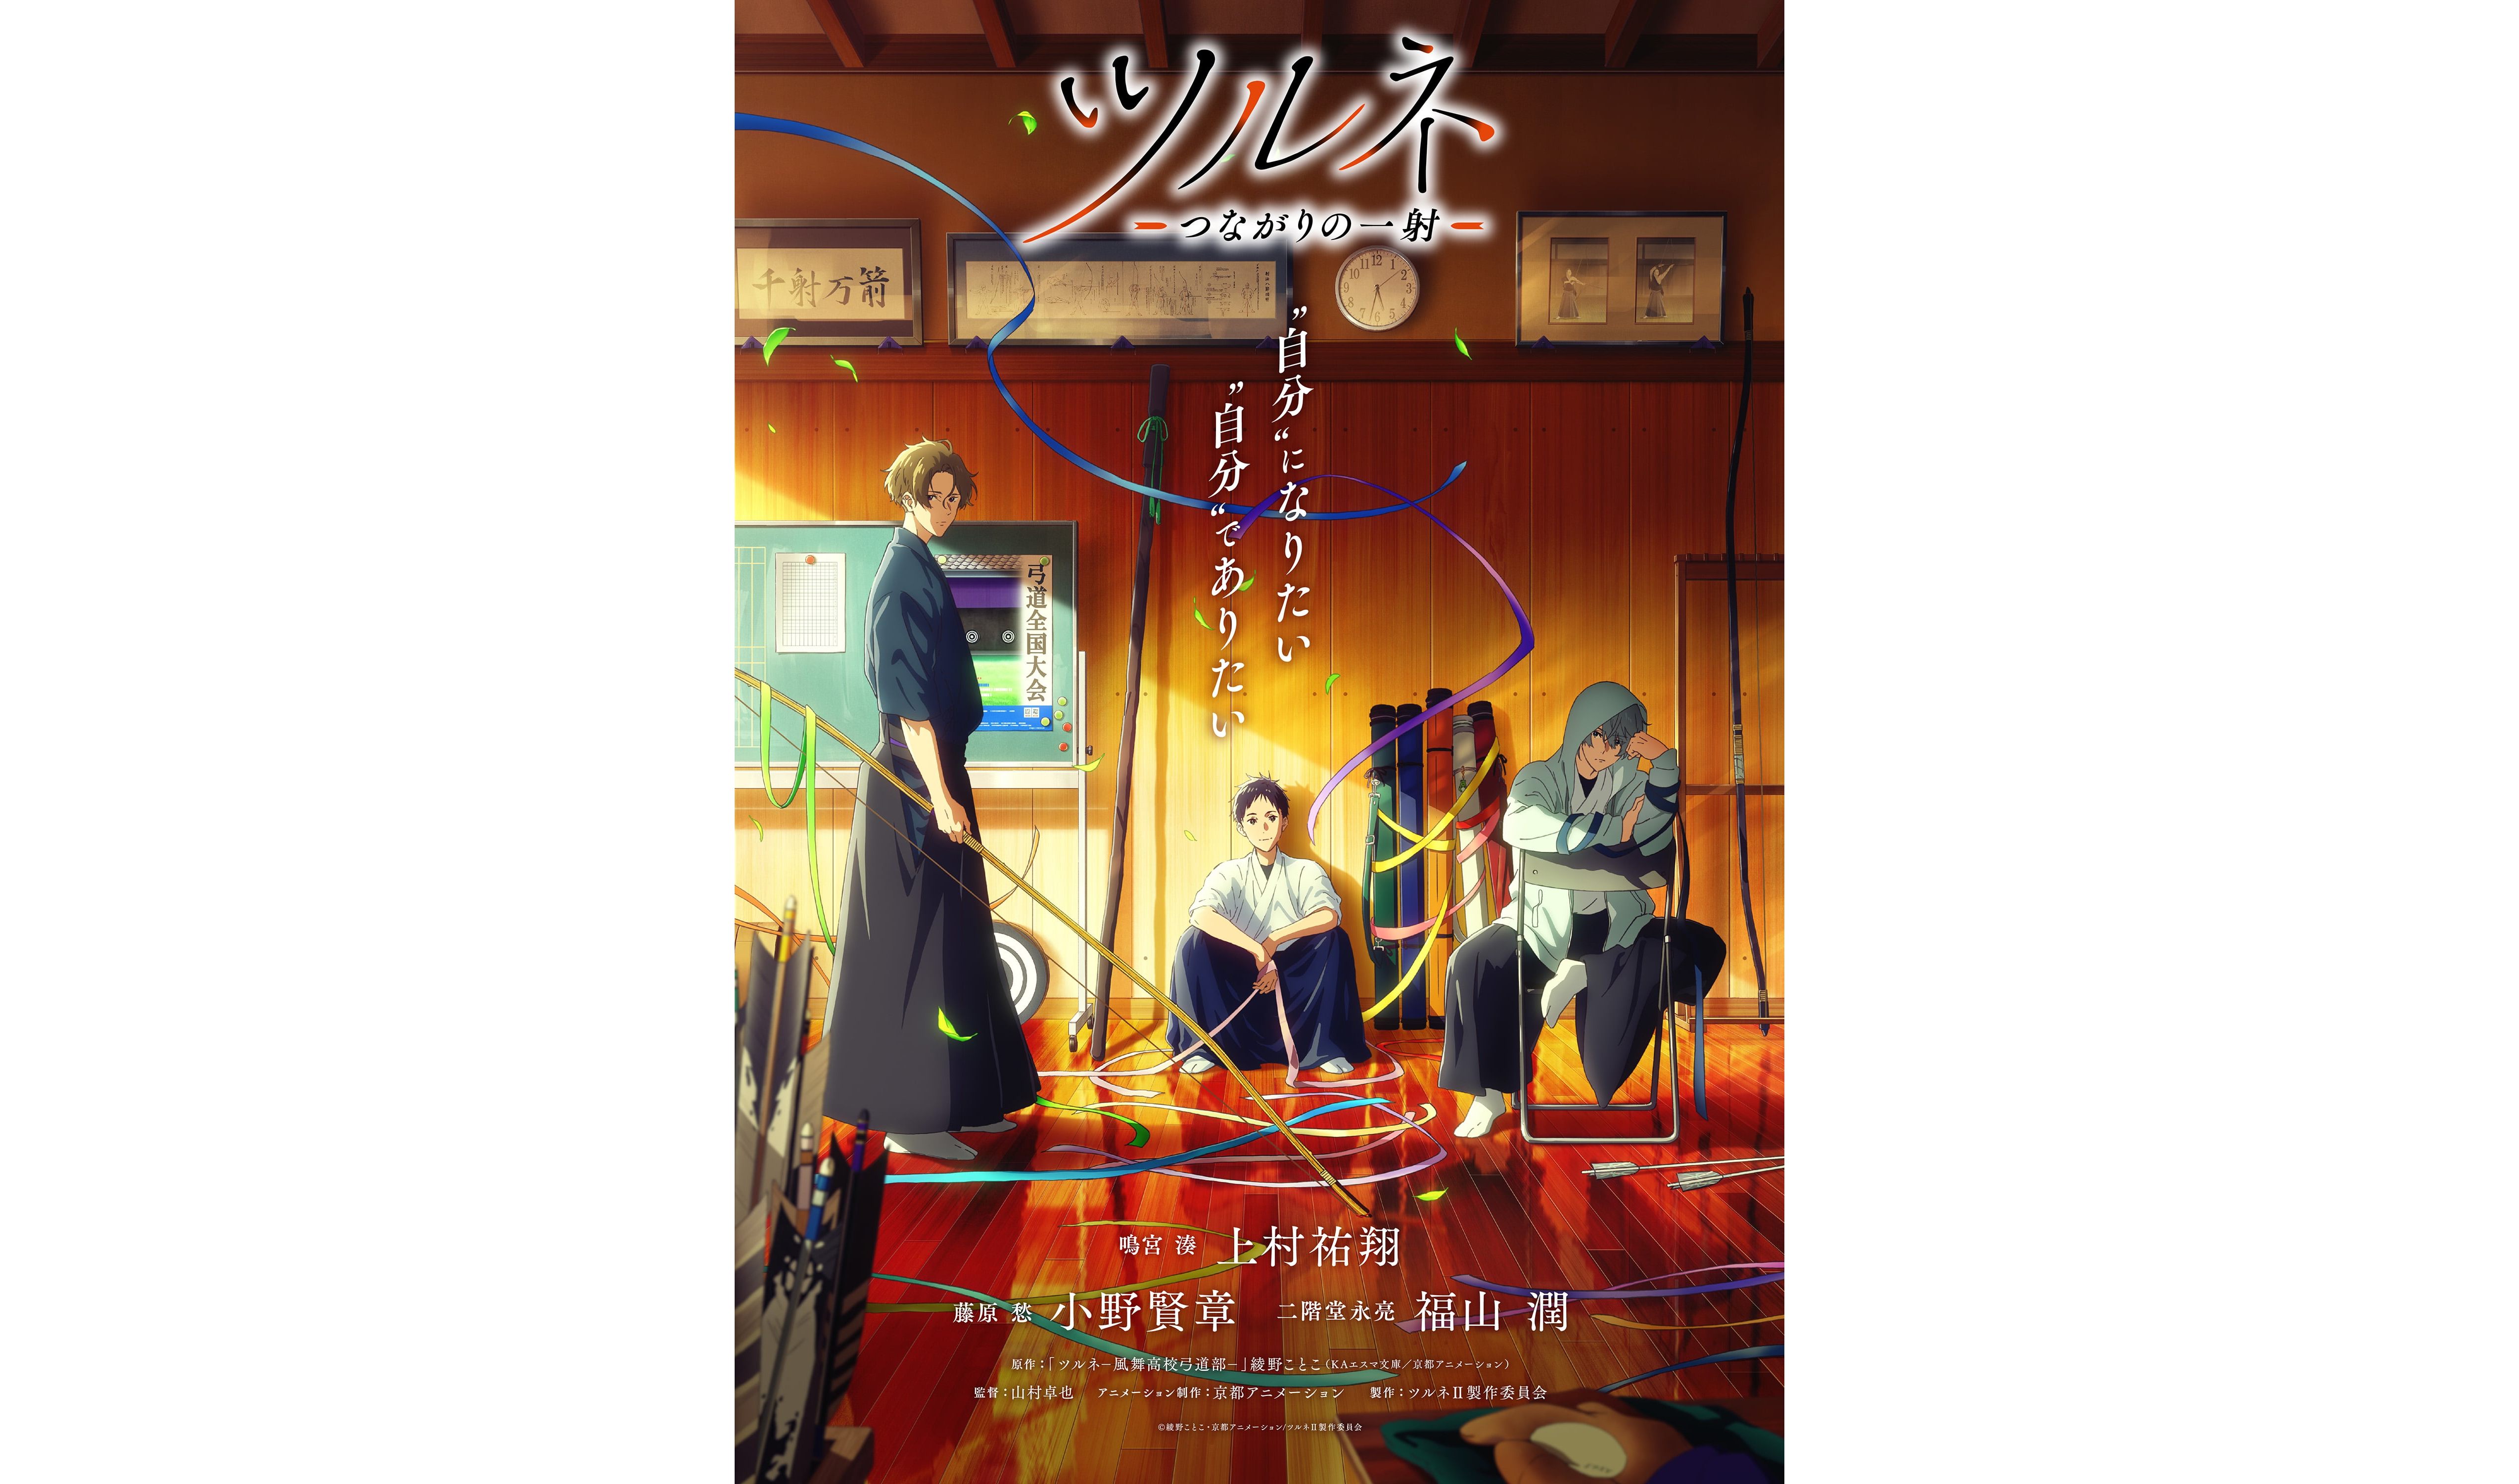 2nd 'Tsurune' Anime Season Reveals Striking New Key Visual